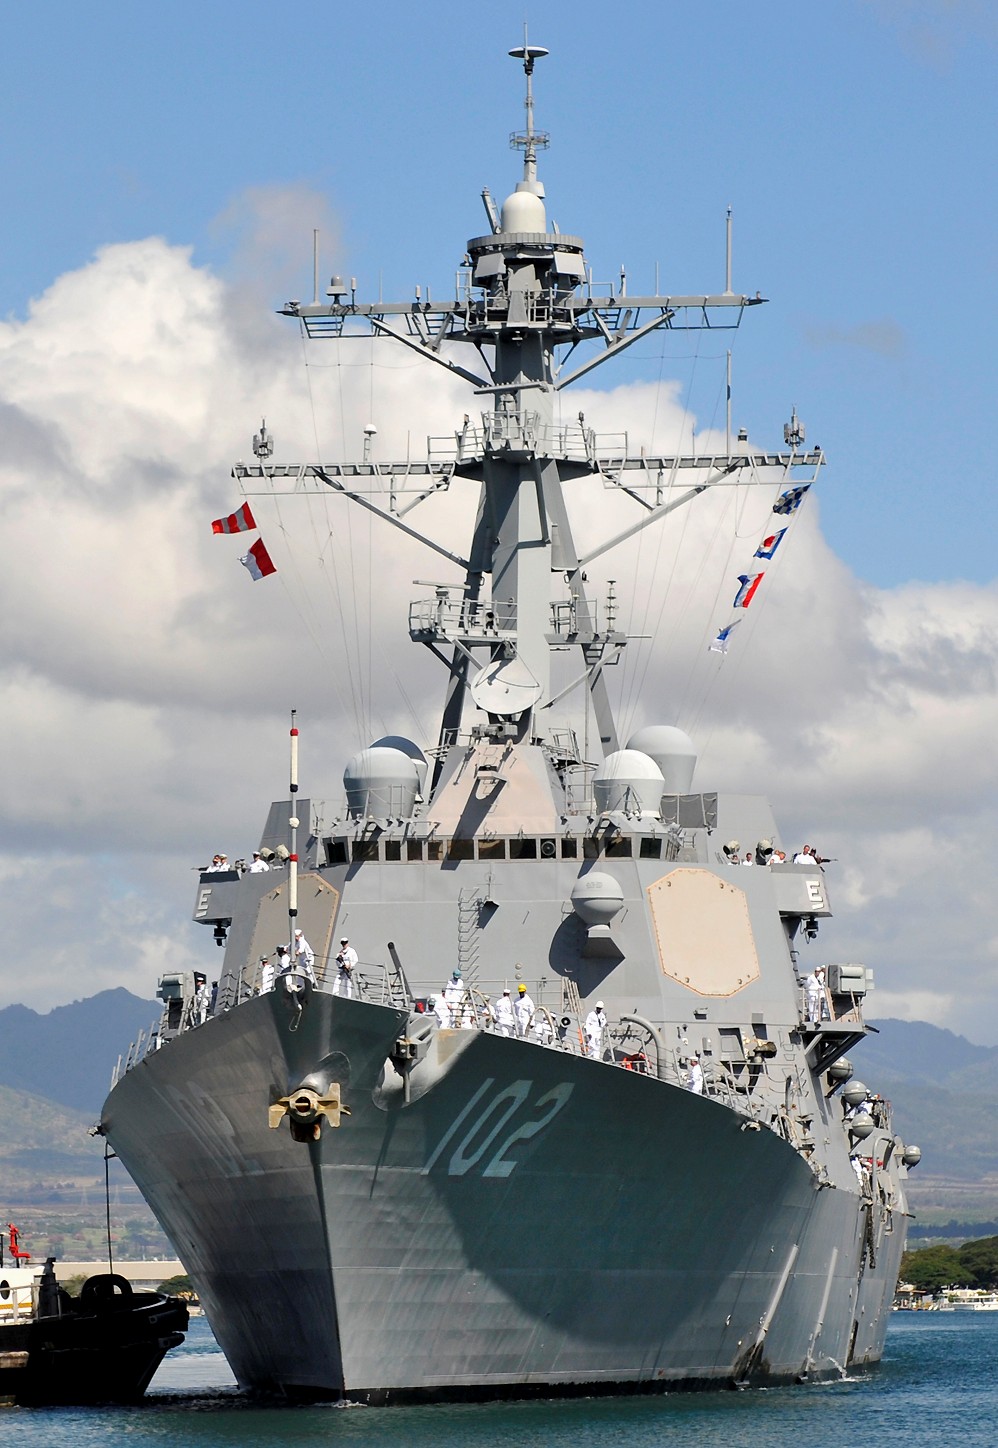 ddg-102 uss sampson guided missile destroyer 2012 20 pearl harbor